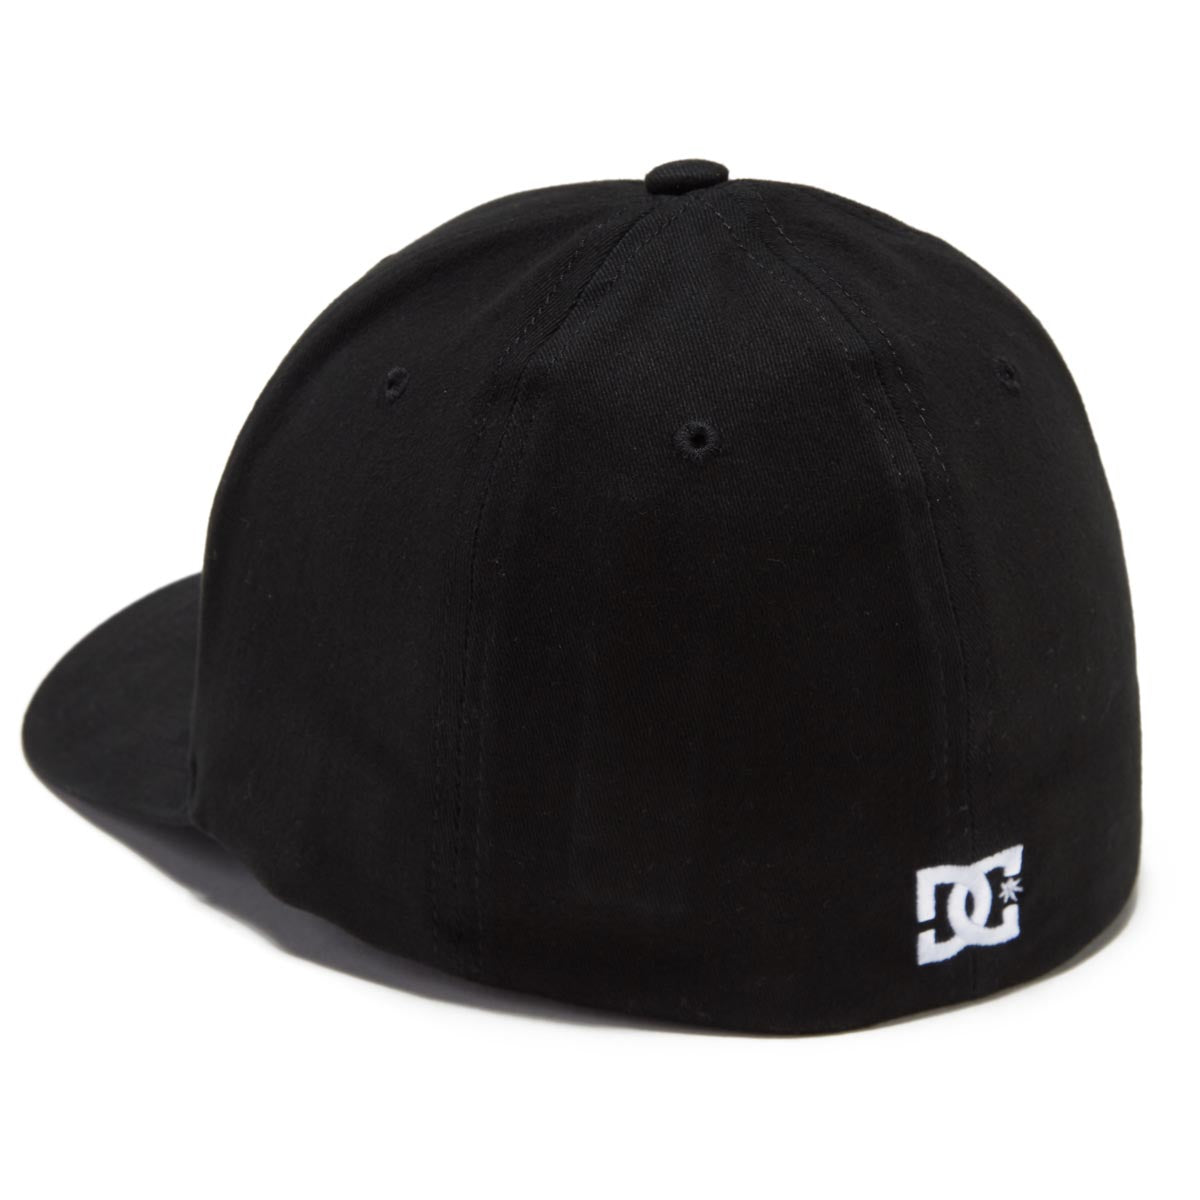 DC Cap Star Hat - Black image 2